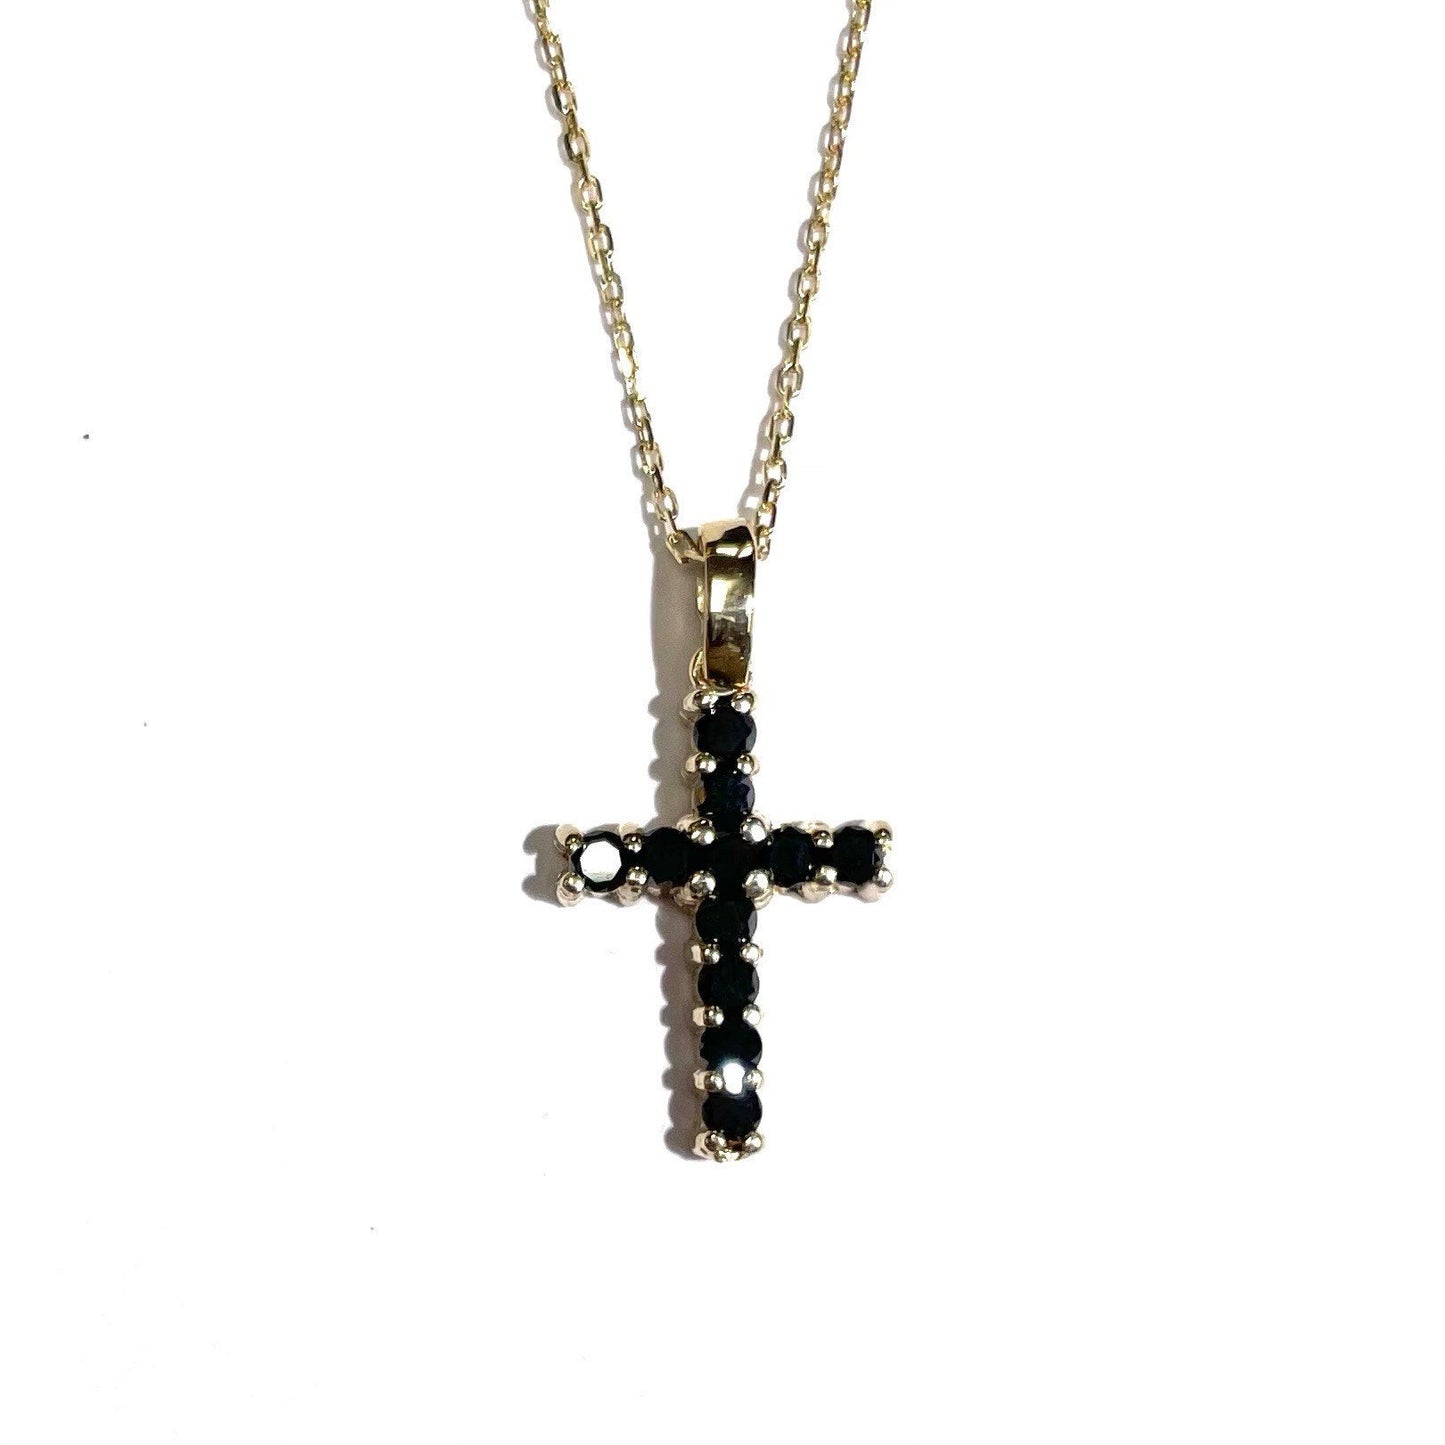 Her Black Diamond Cross Pendant